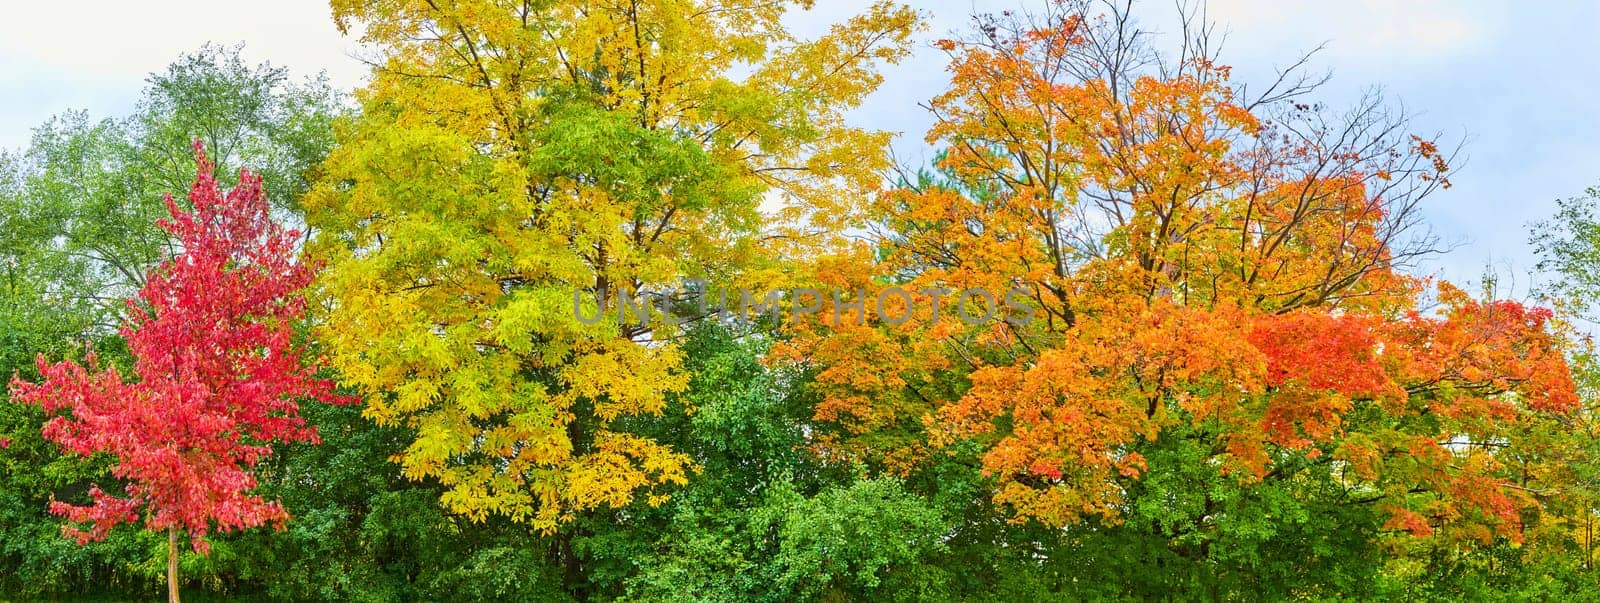 Vibrant Autumn Panorama in Michigan, Showcasing Diverse Foliage Colors under Overcast Sky